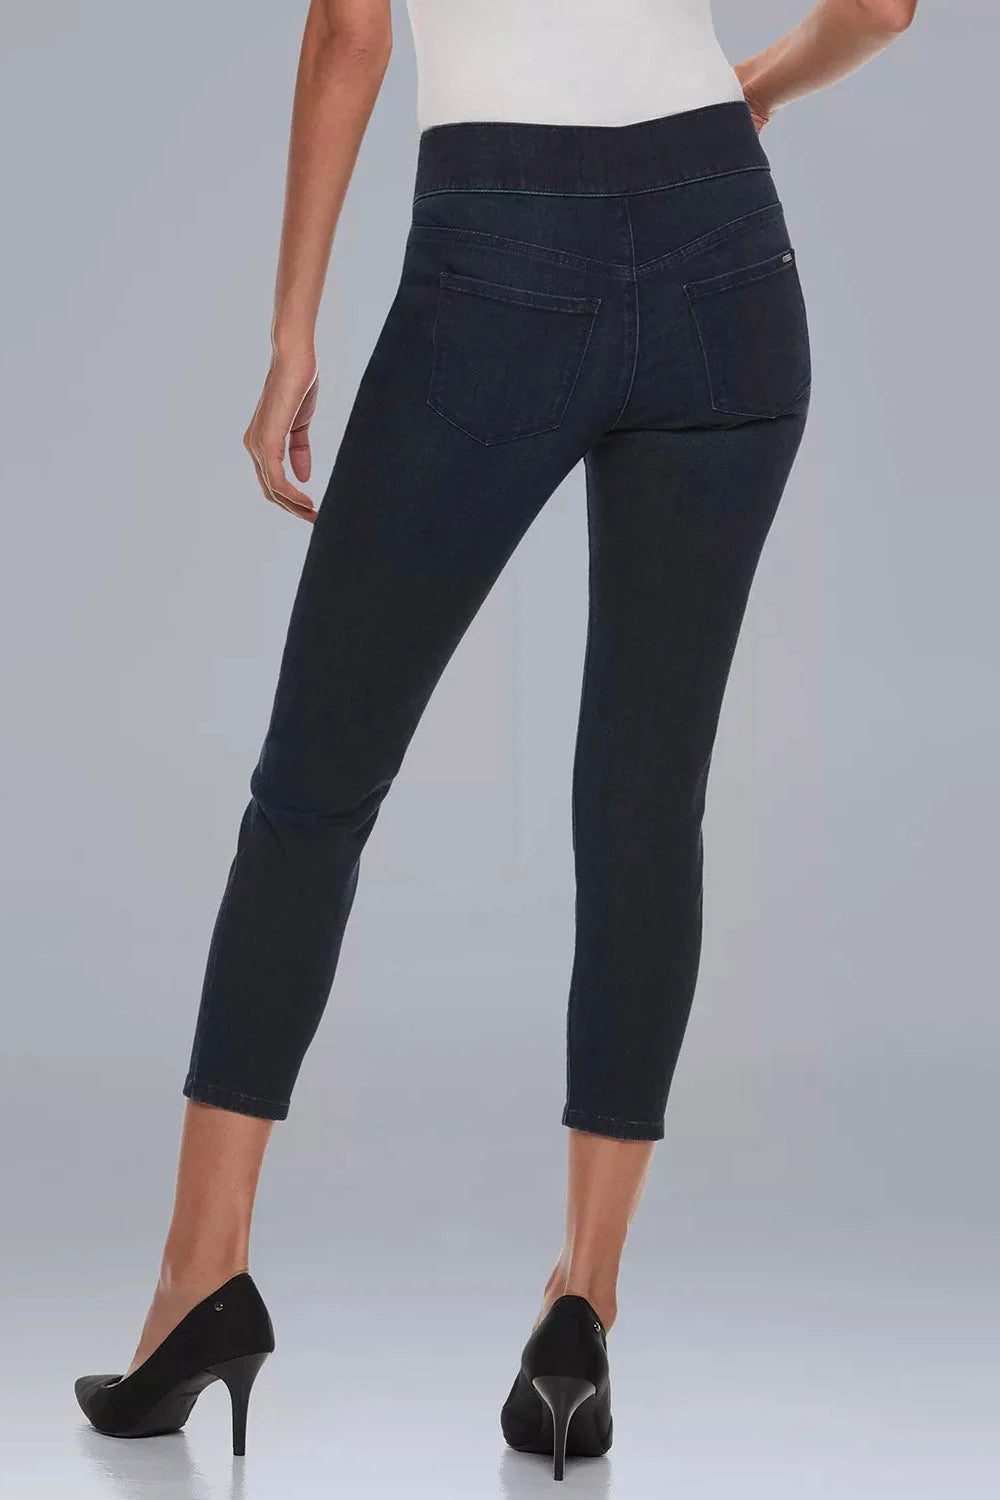 Vera Wang, Jeans, Womens Simply Vera Vera Wang Stretch Highwaisted Skinny  Jeans Size 4